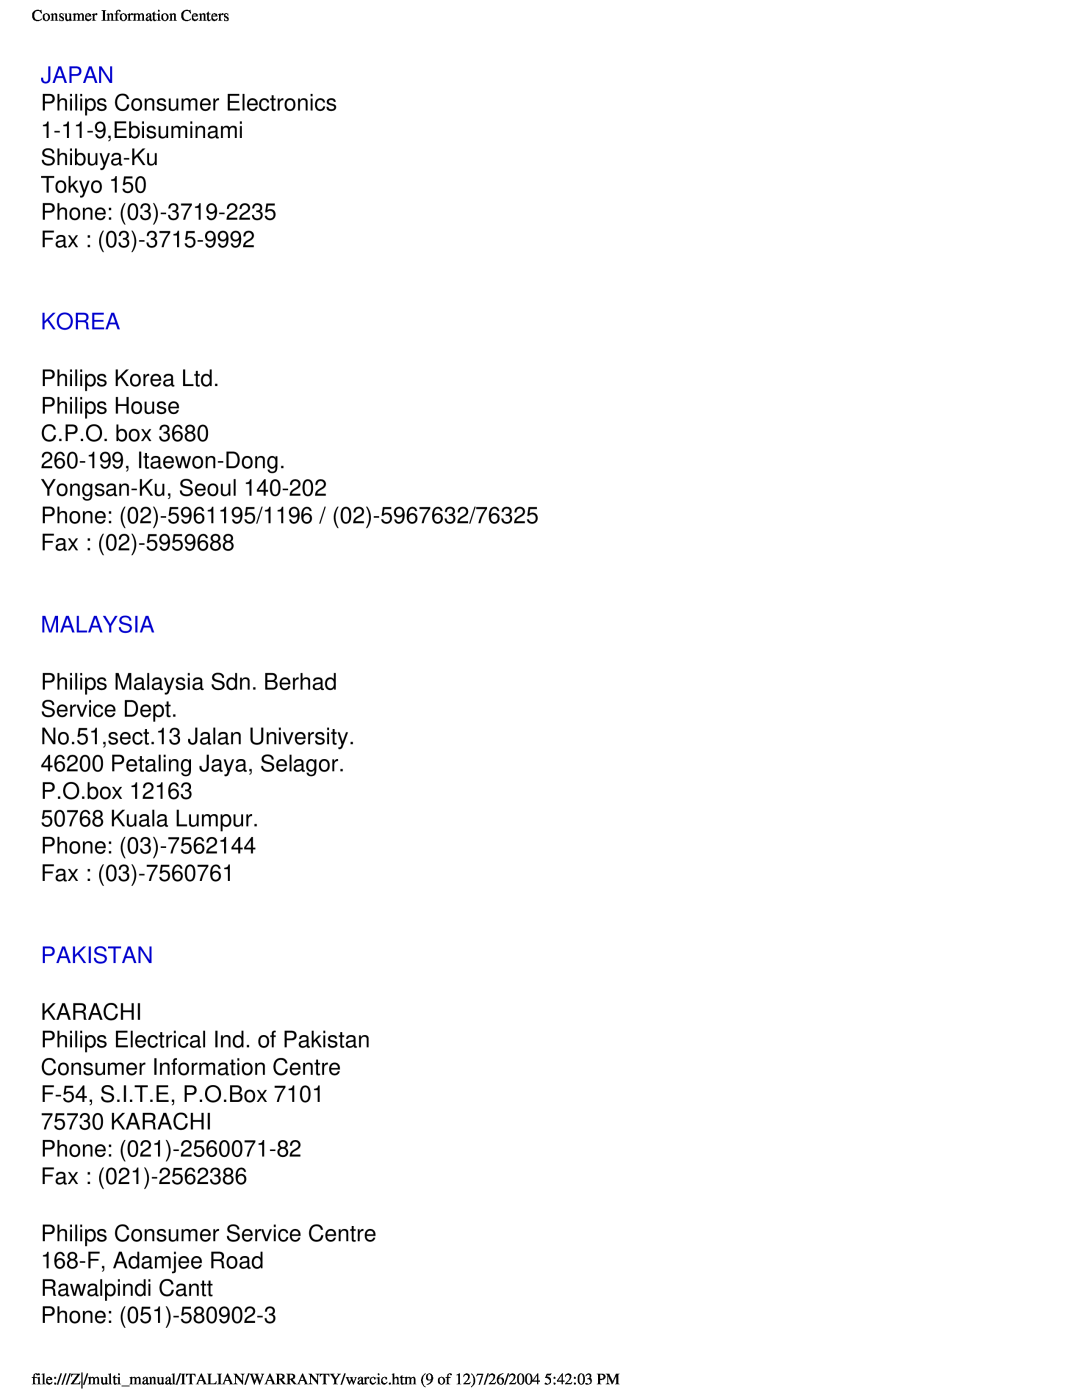 Philips 201B user manual Japan, Tokyo Phone Fax, Korea, Malaysia, Pakistan 